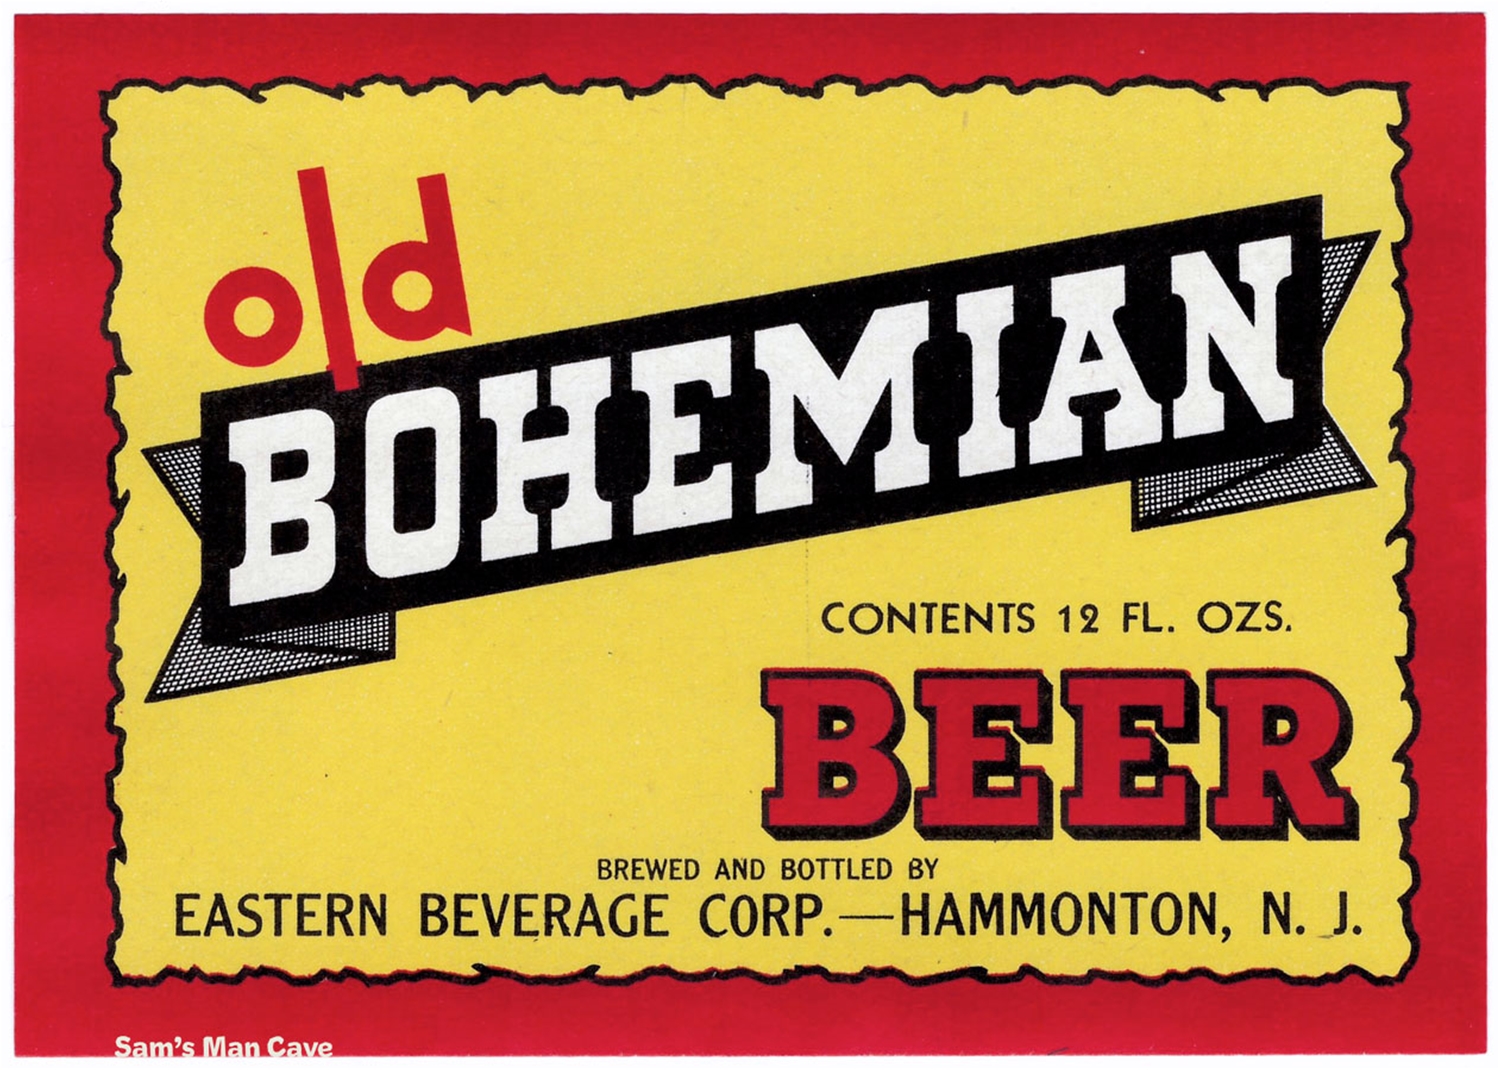 Old Bohemian Beer Label